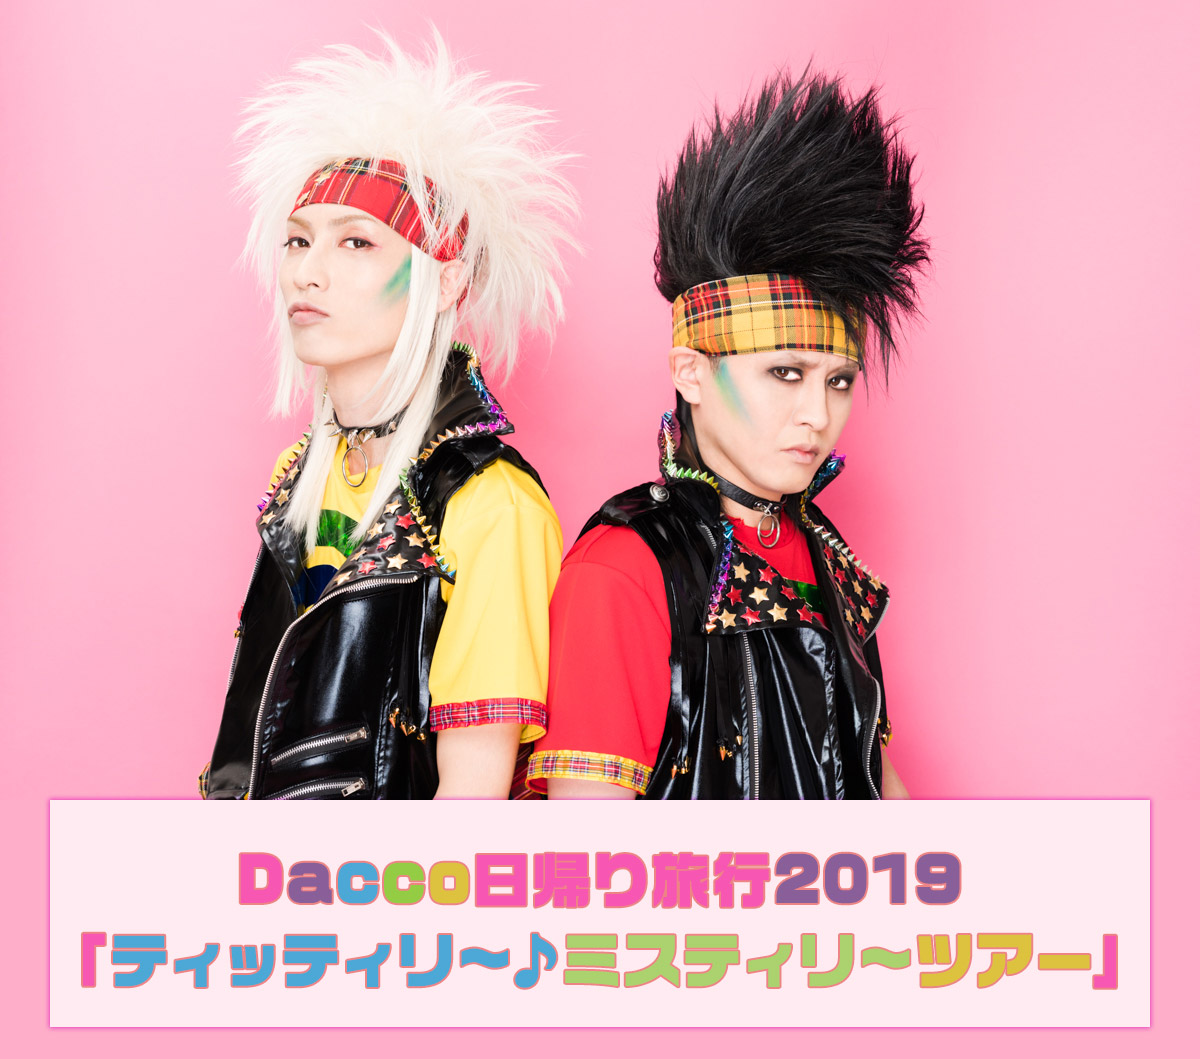 Dacco日帰り旅行2019「ティッティリ〜♪ミスティリ〜ツアー」